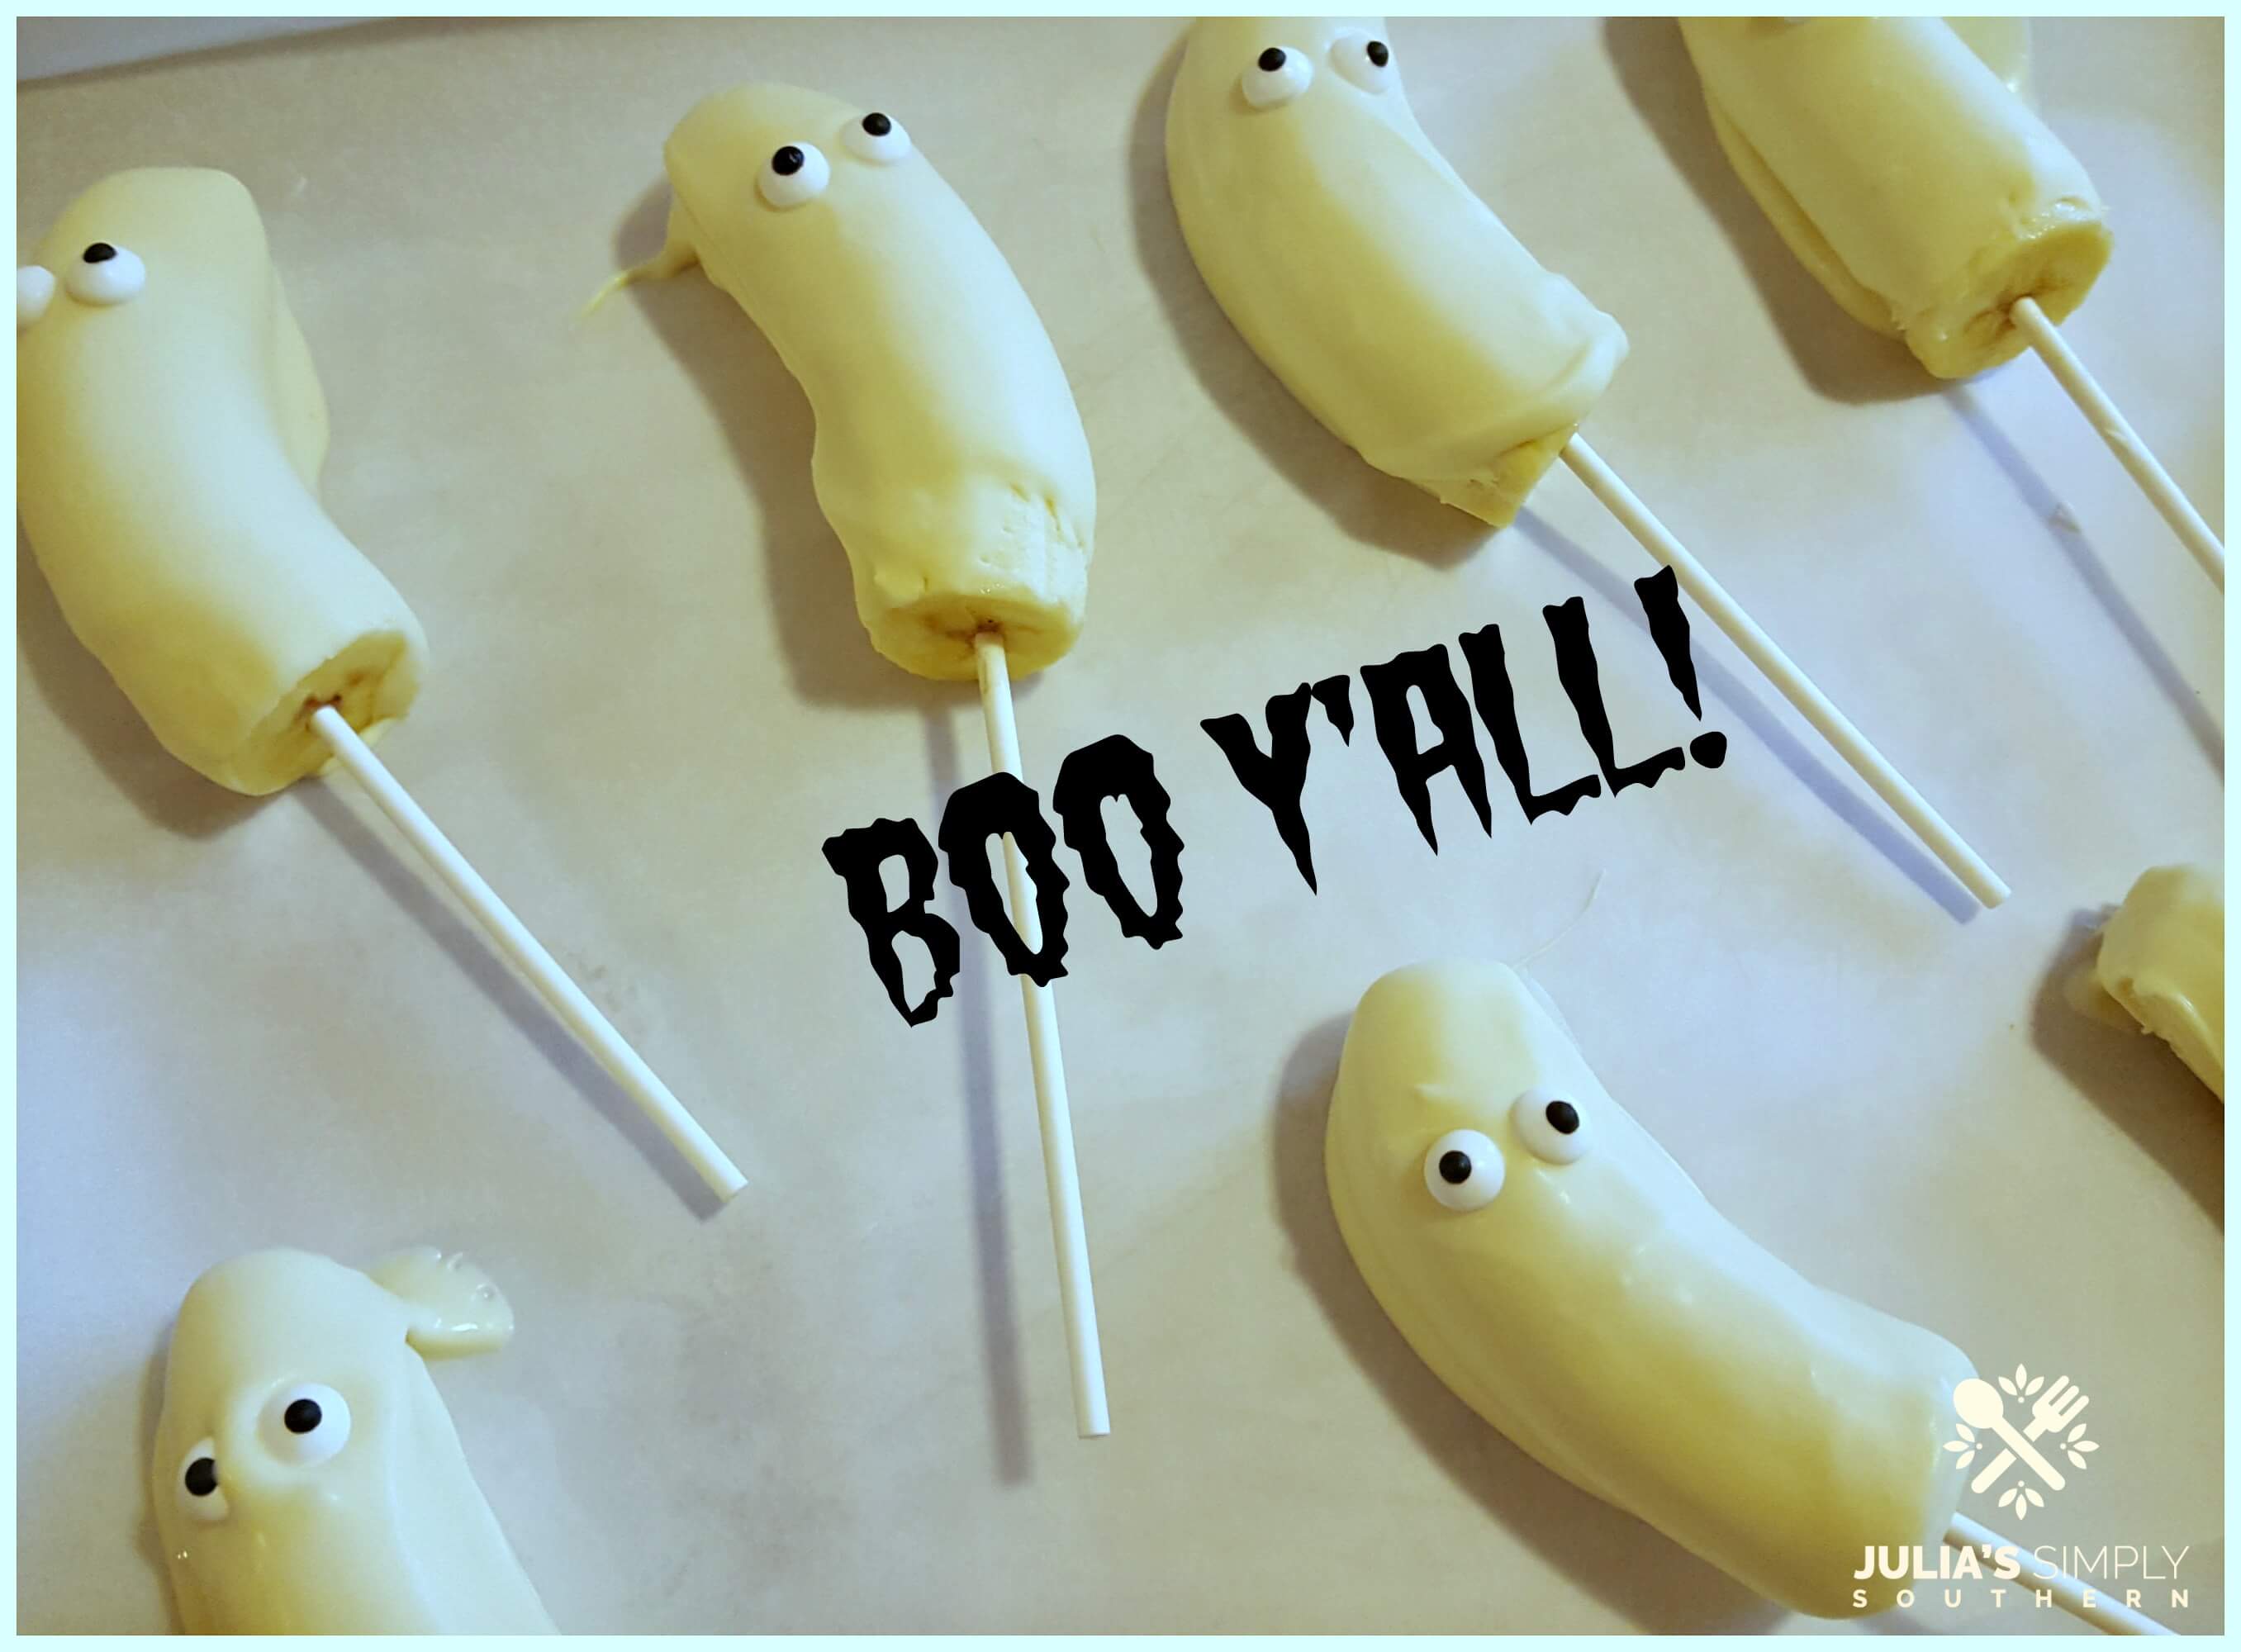 Chill banana ghost lollipops